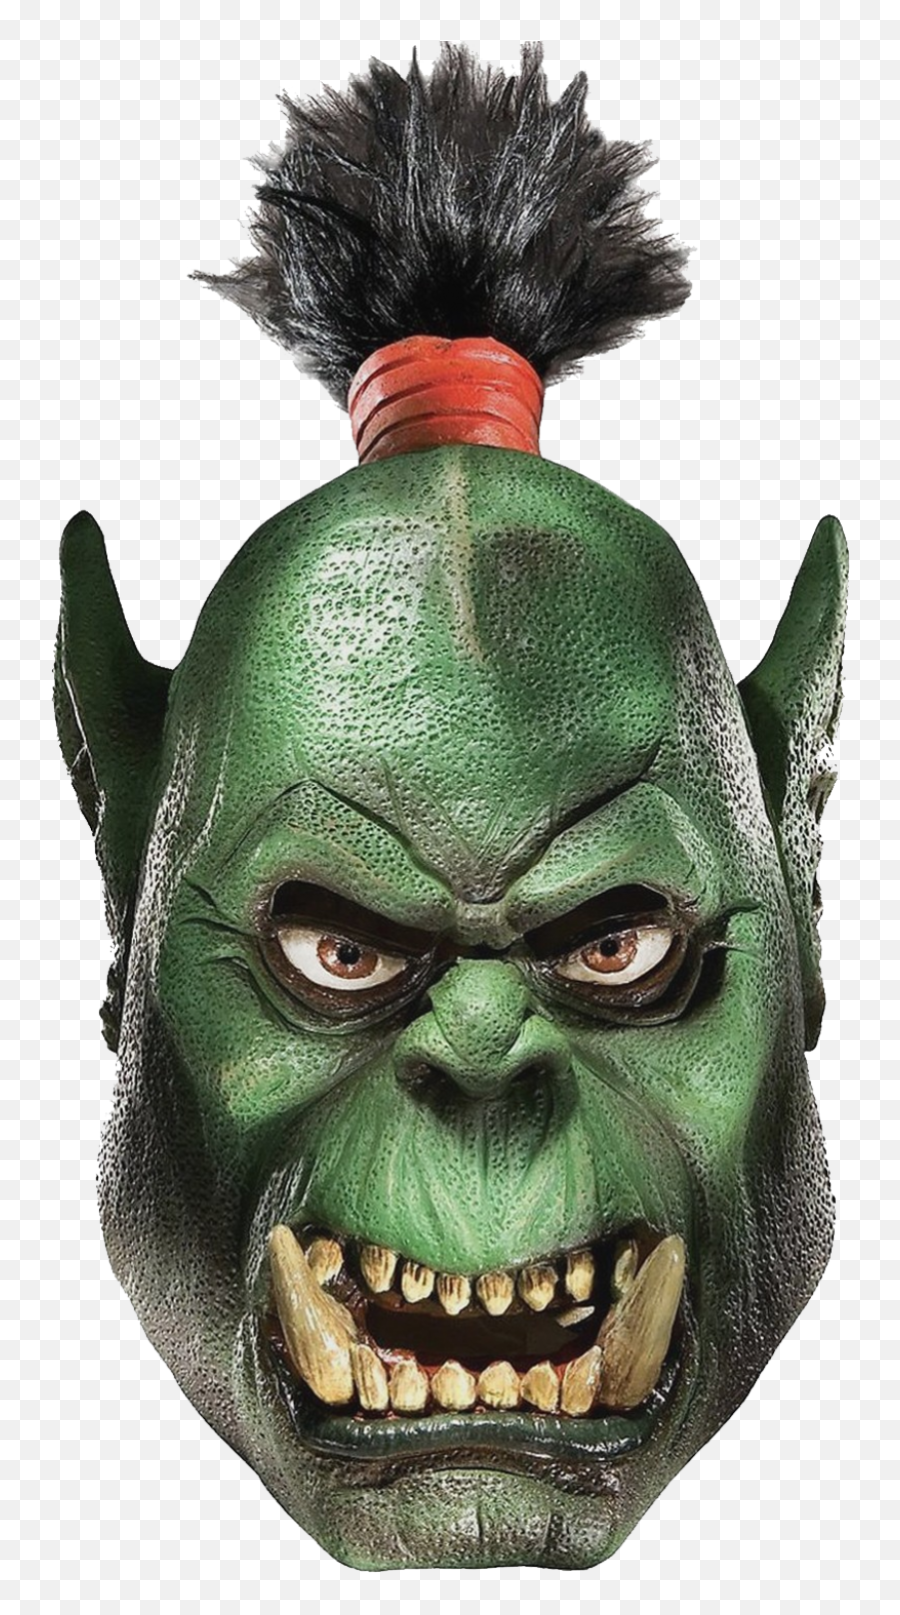 Orc Png Image - Masks Of The World,Shrek Head Png